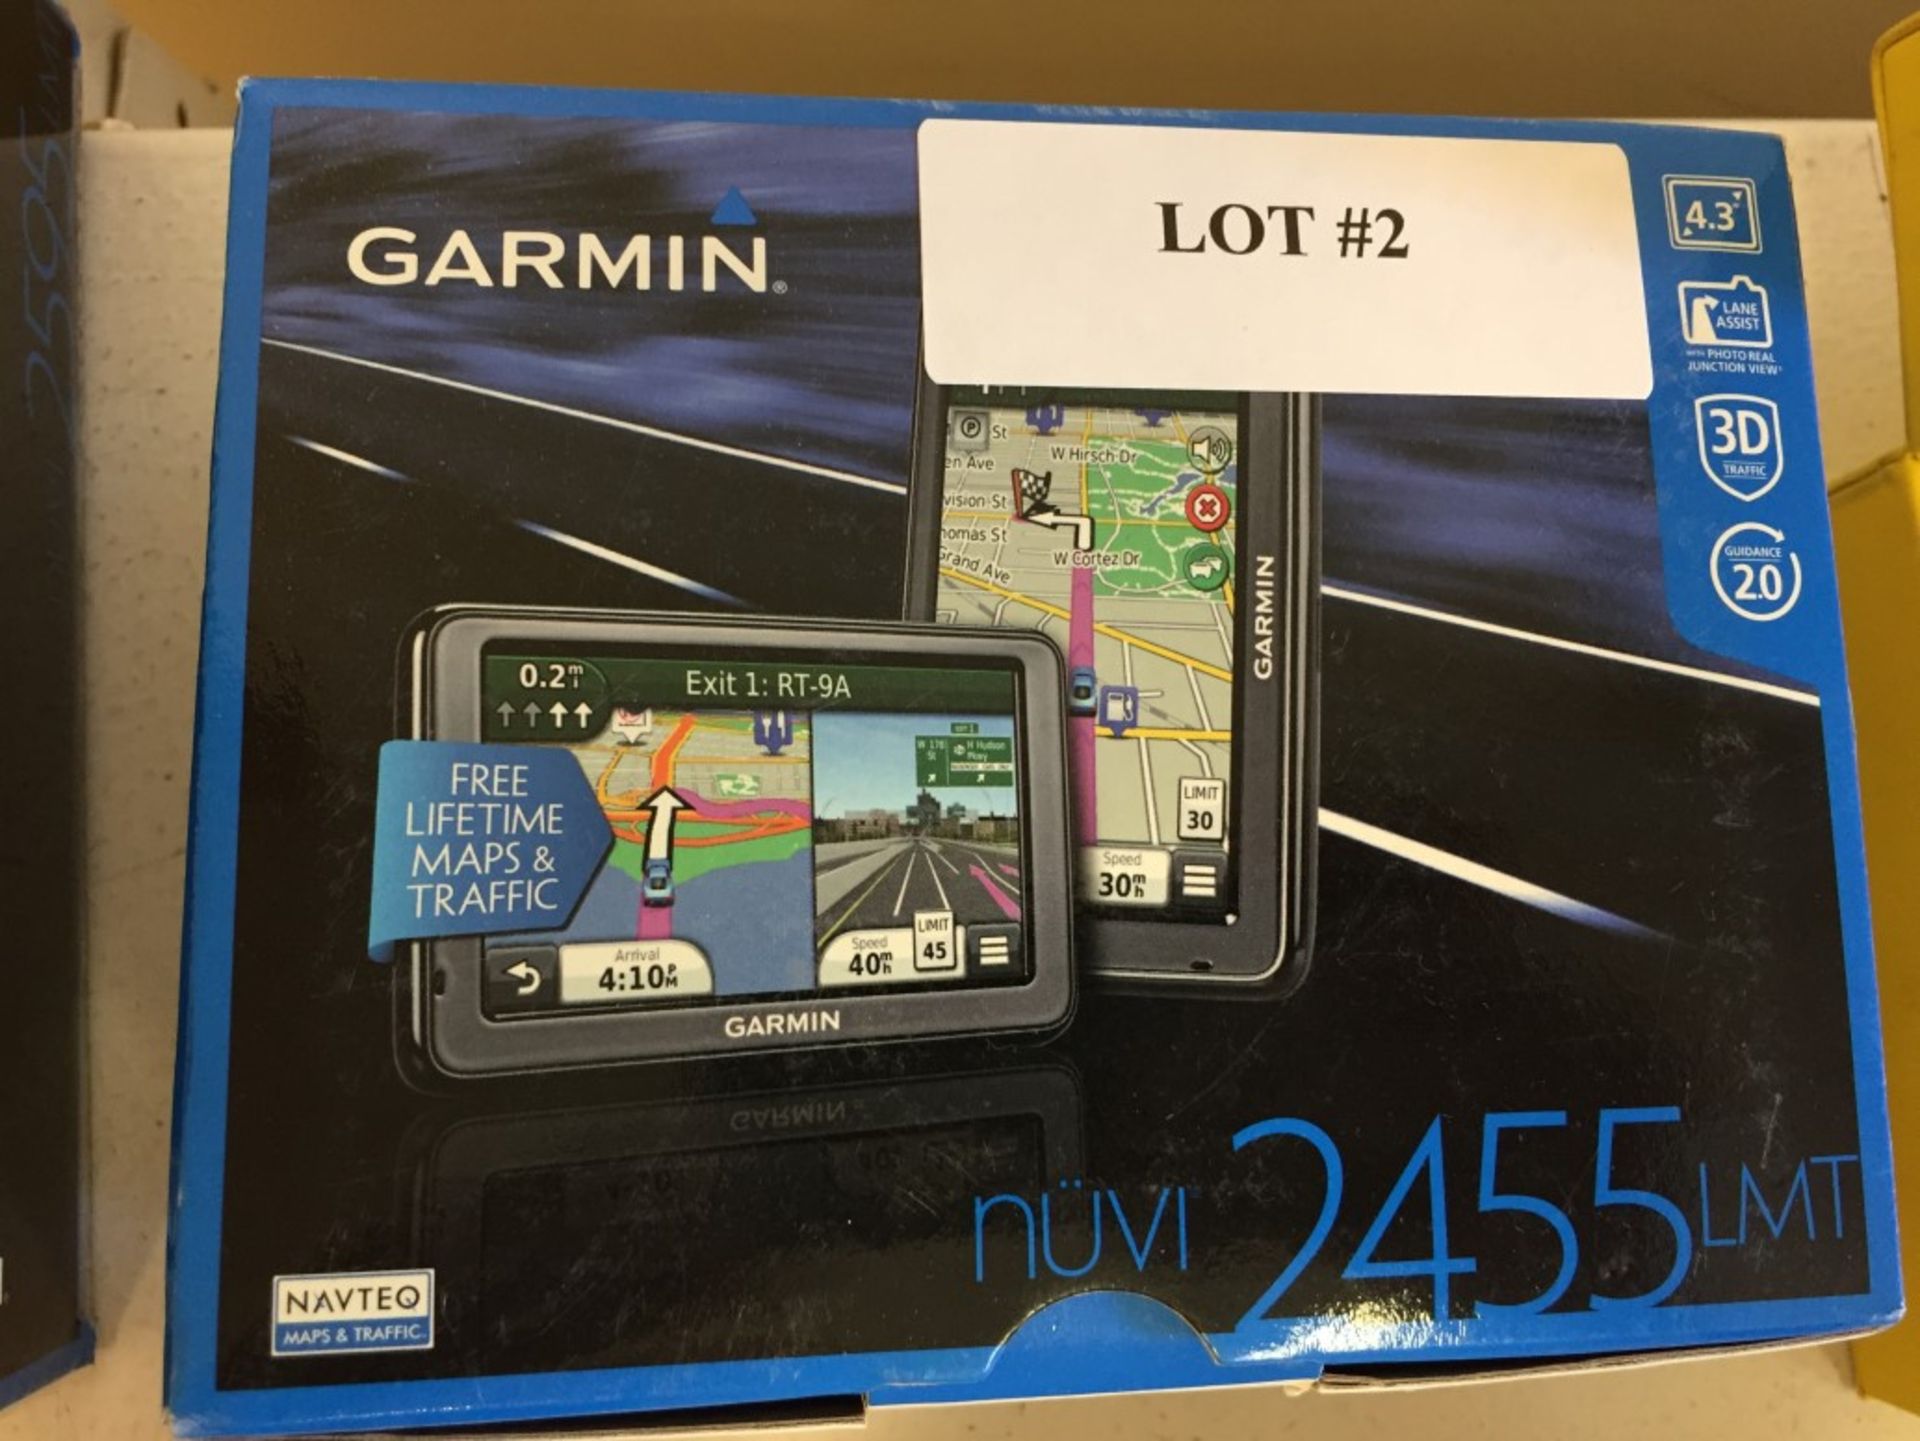 Garmin Nuvi 2455 LMT GPS